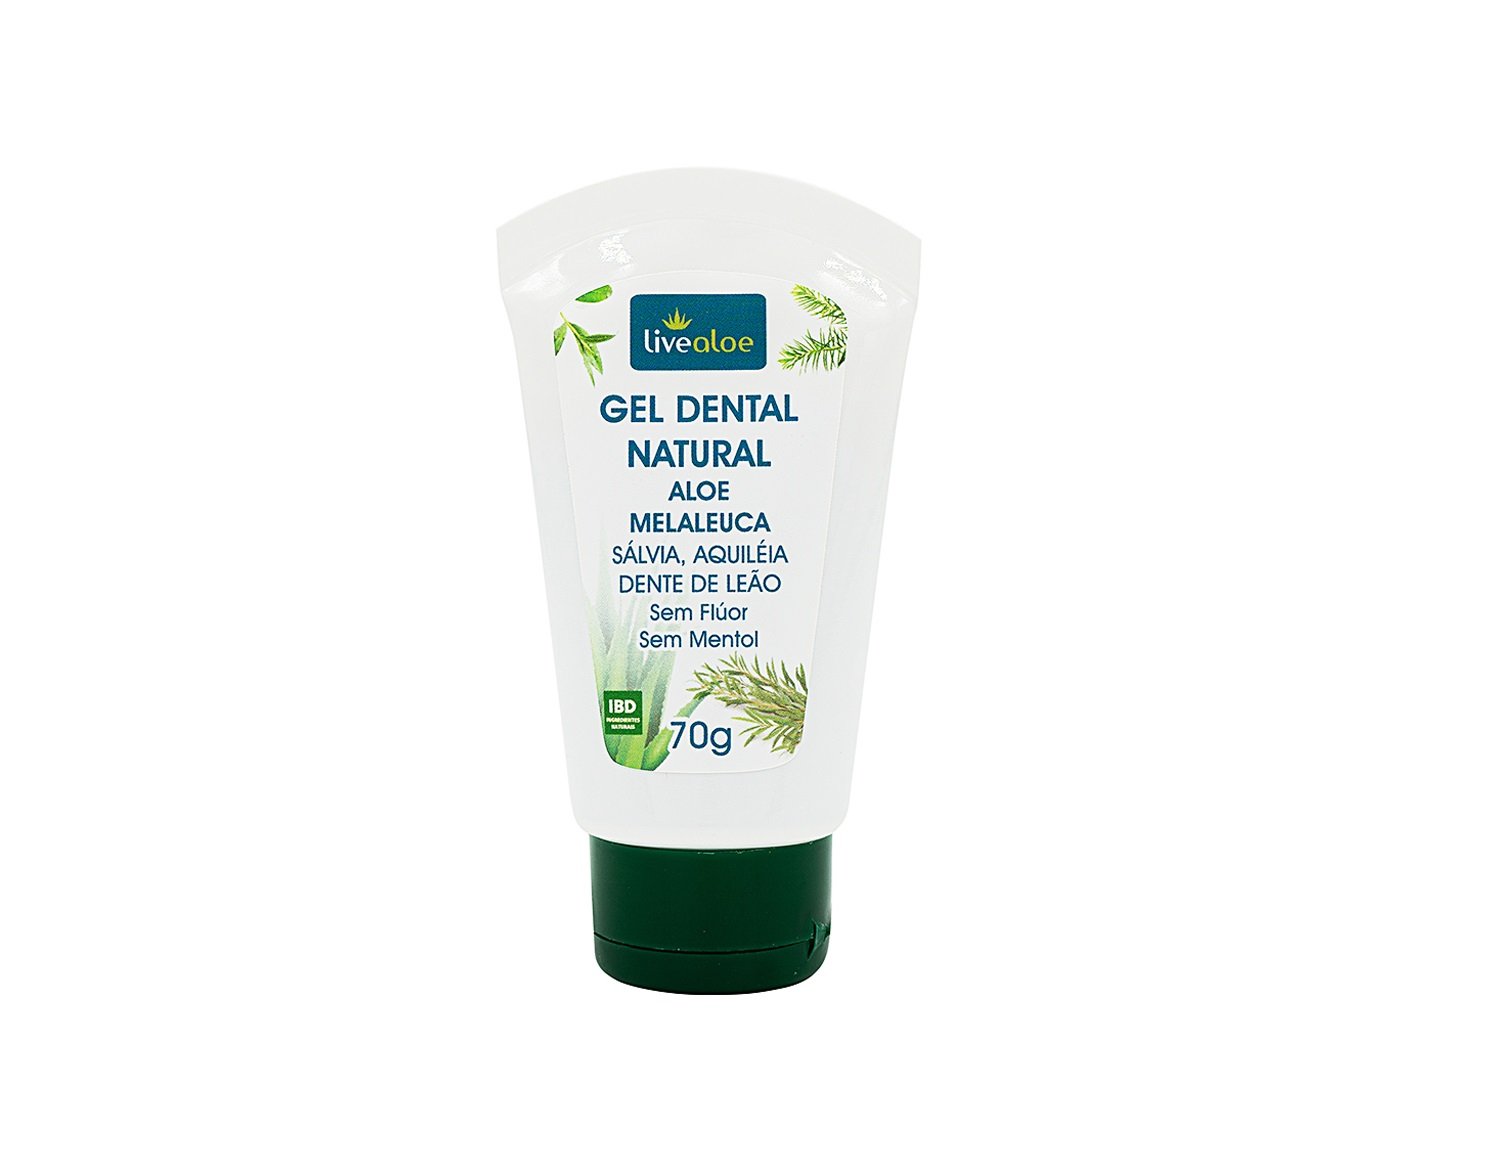 Gel Dental Natural Aloe Melaleuca LiveAloe 70g